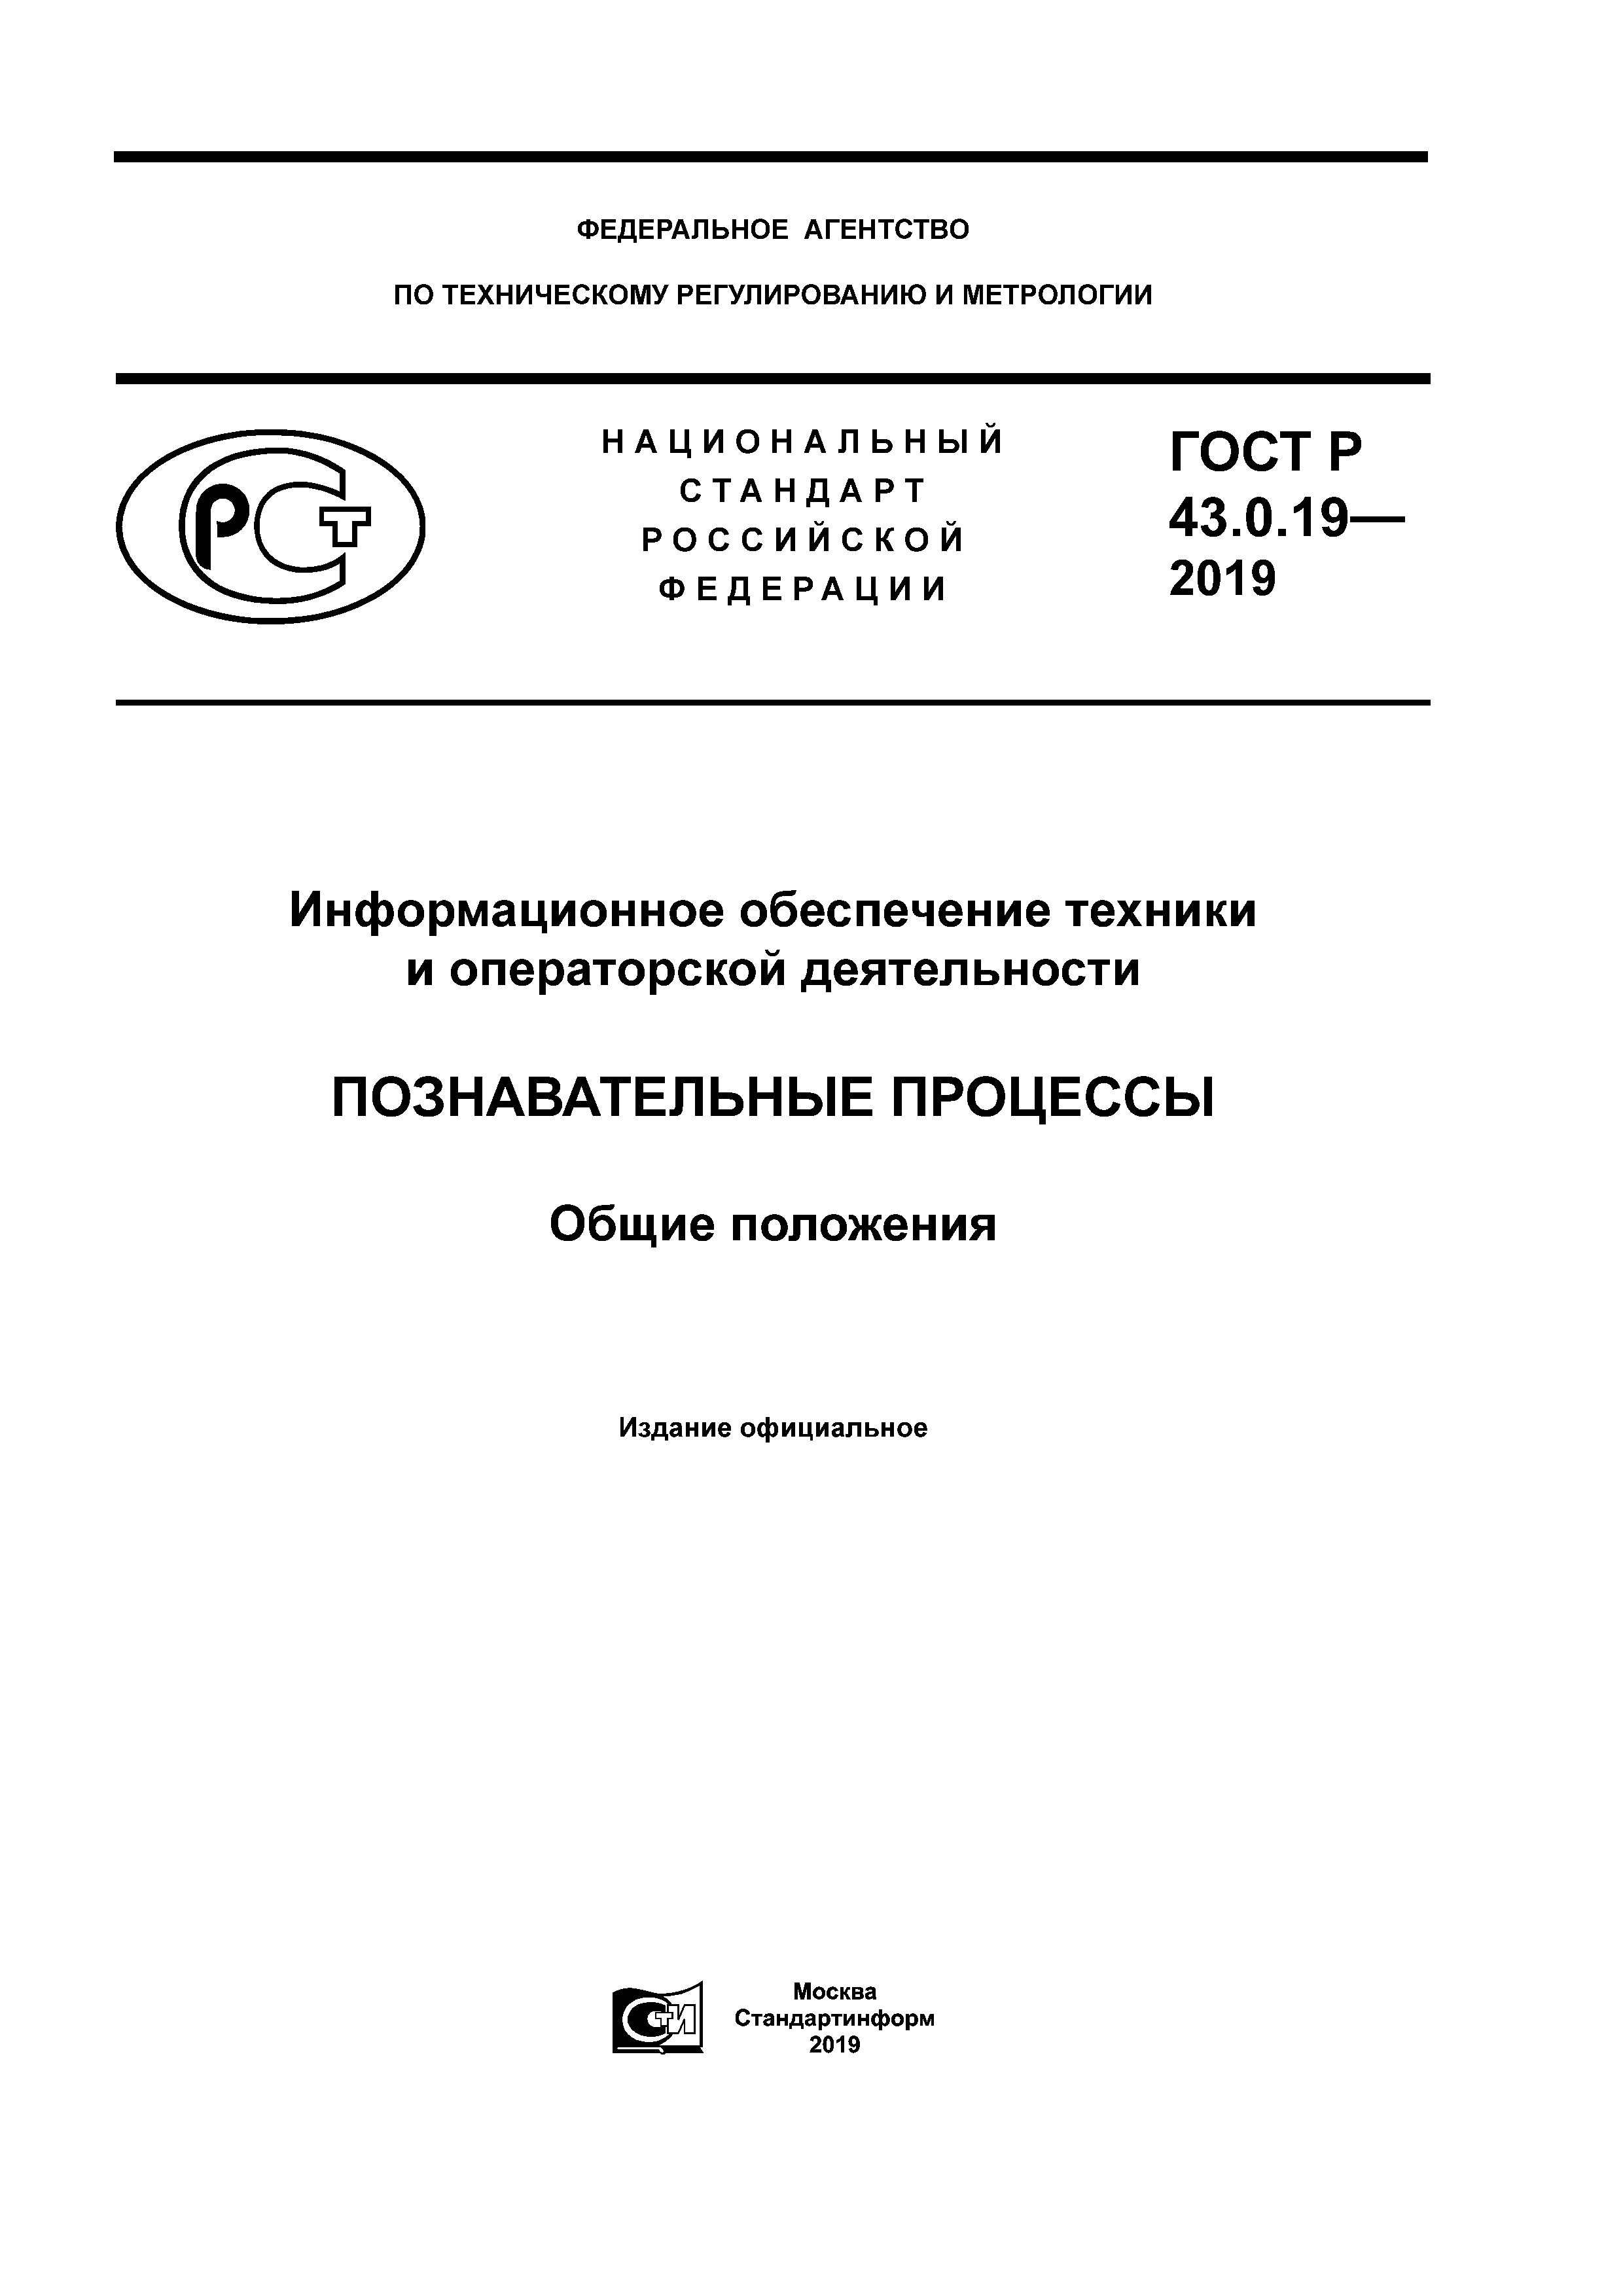 ГОСТ Р 43.0.19-2019